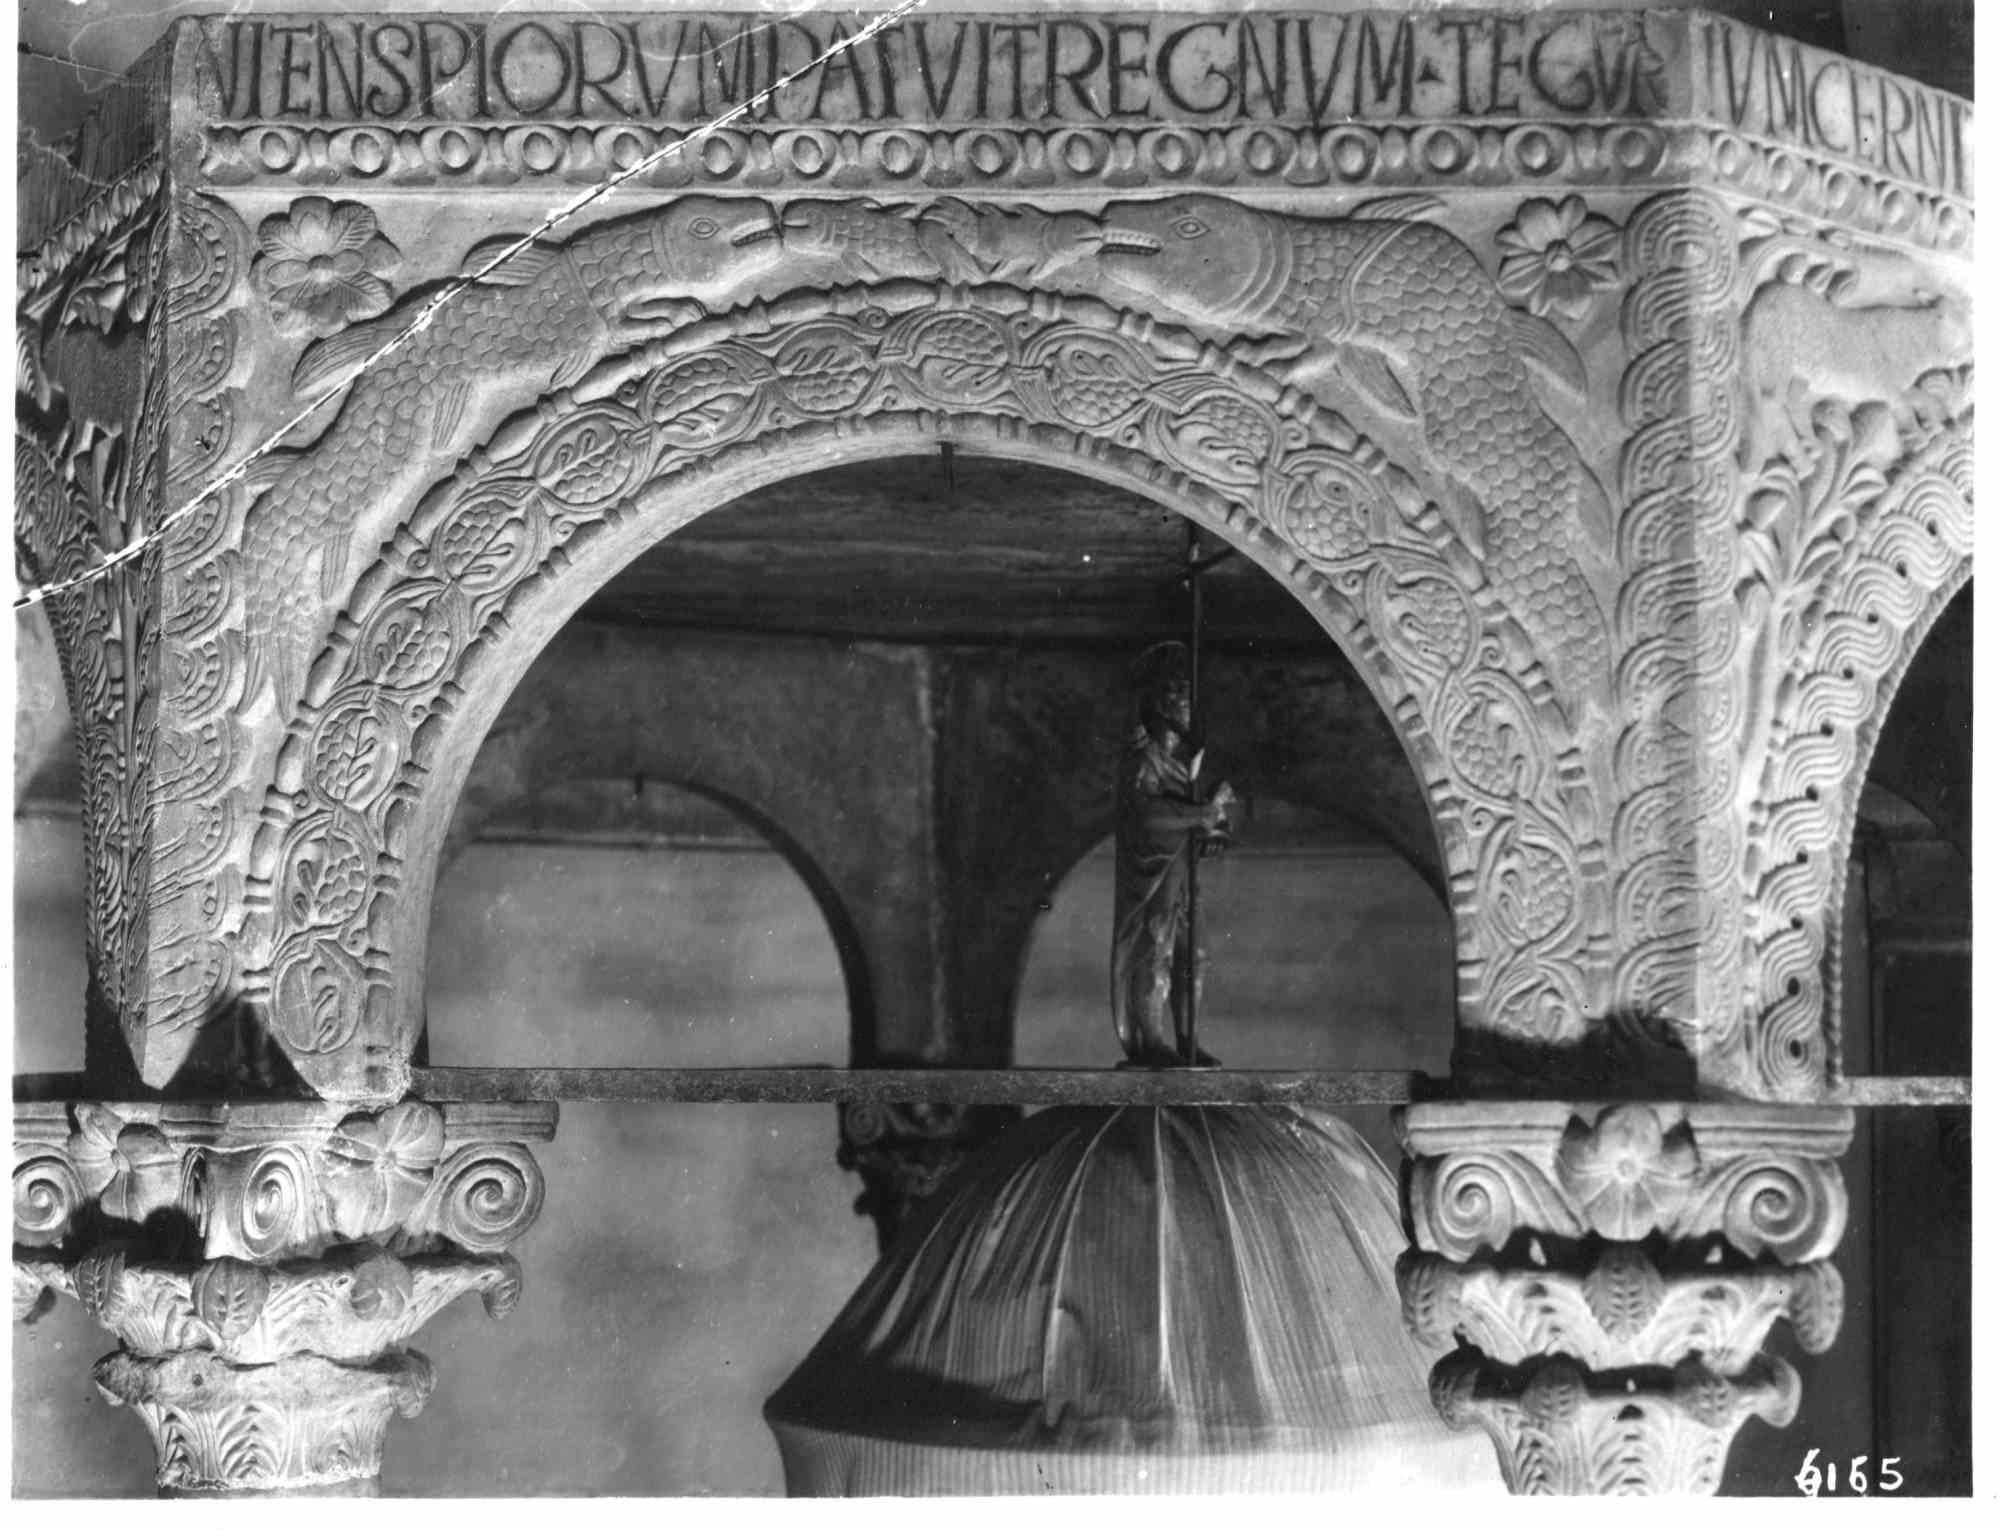 Osvaldo Böhm Black and White Photograph - Cividale Cathedral - Vintage Photo Detail by Osvaldo Bohm - Early 20th Century